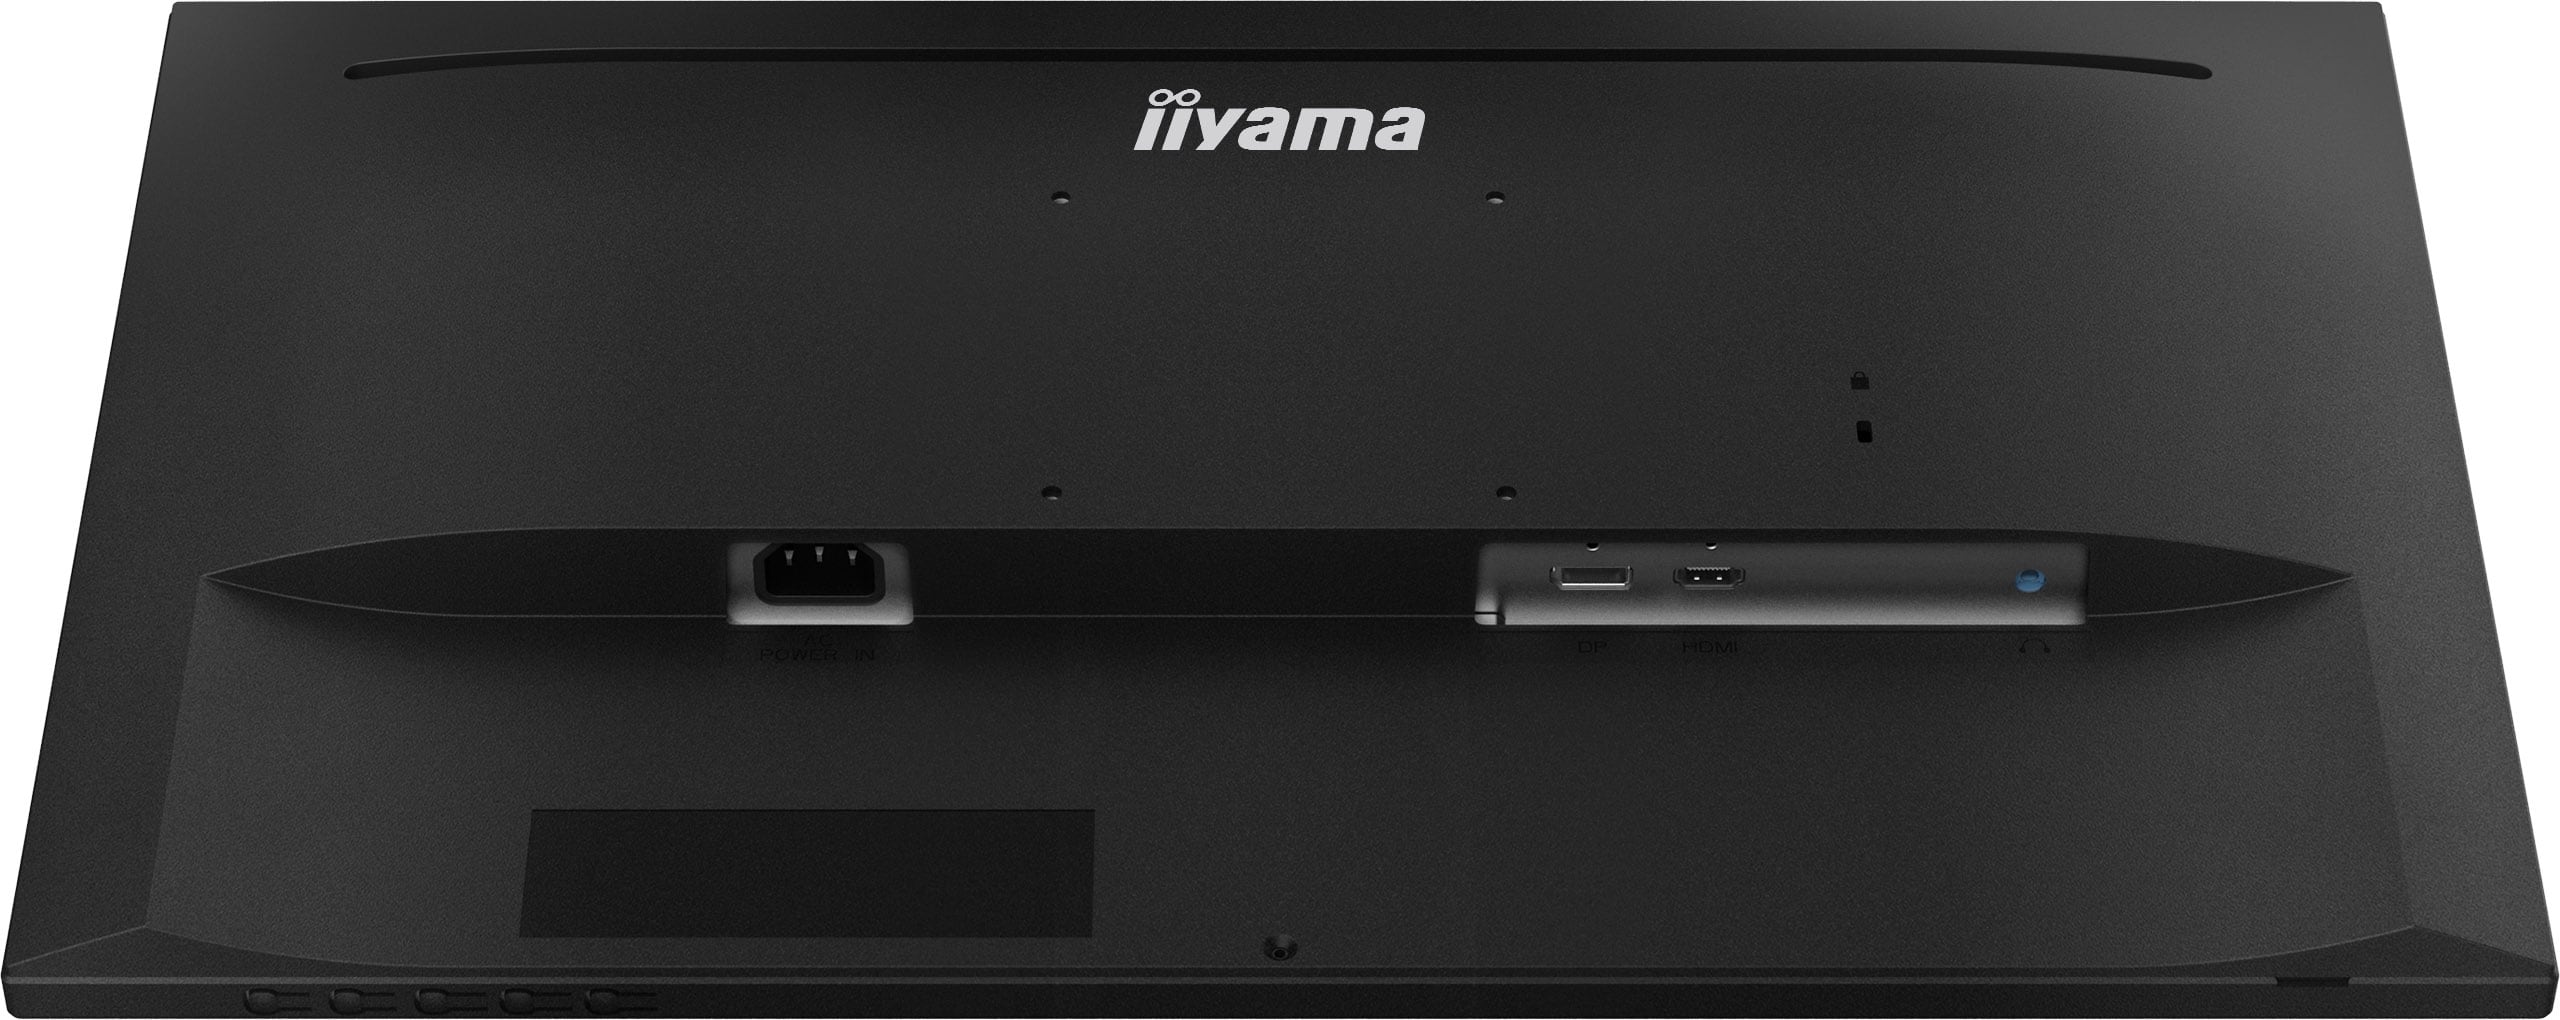 Iiyama ProLite XUB2493HS-B5 | 24" | höhenverstellbarer Office Monitor